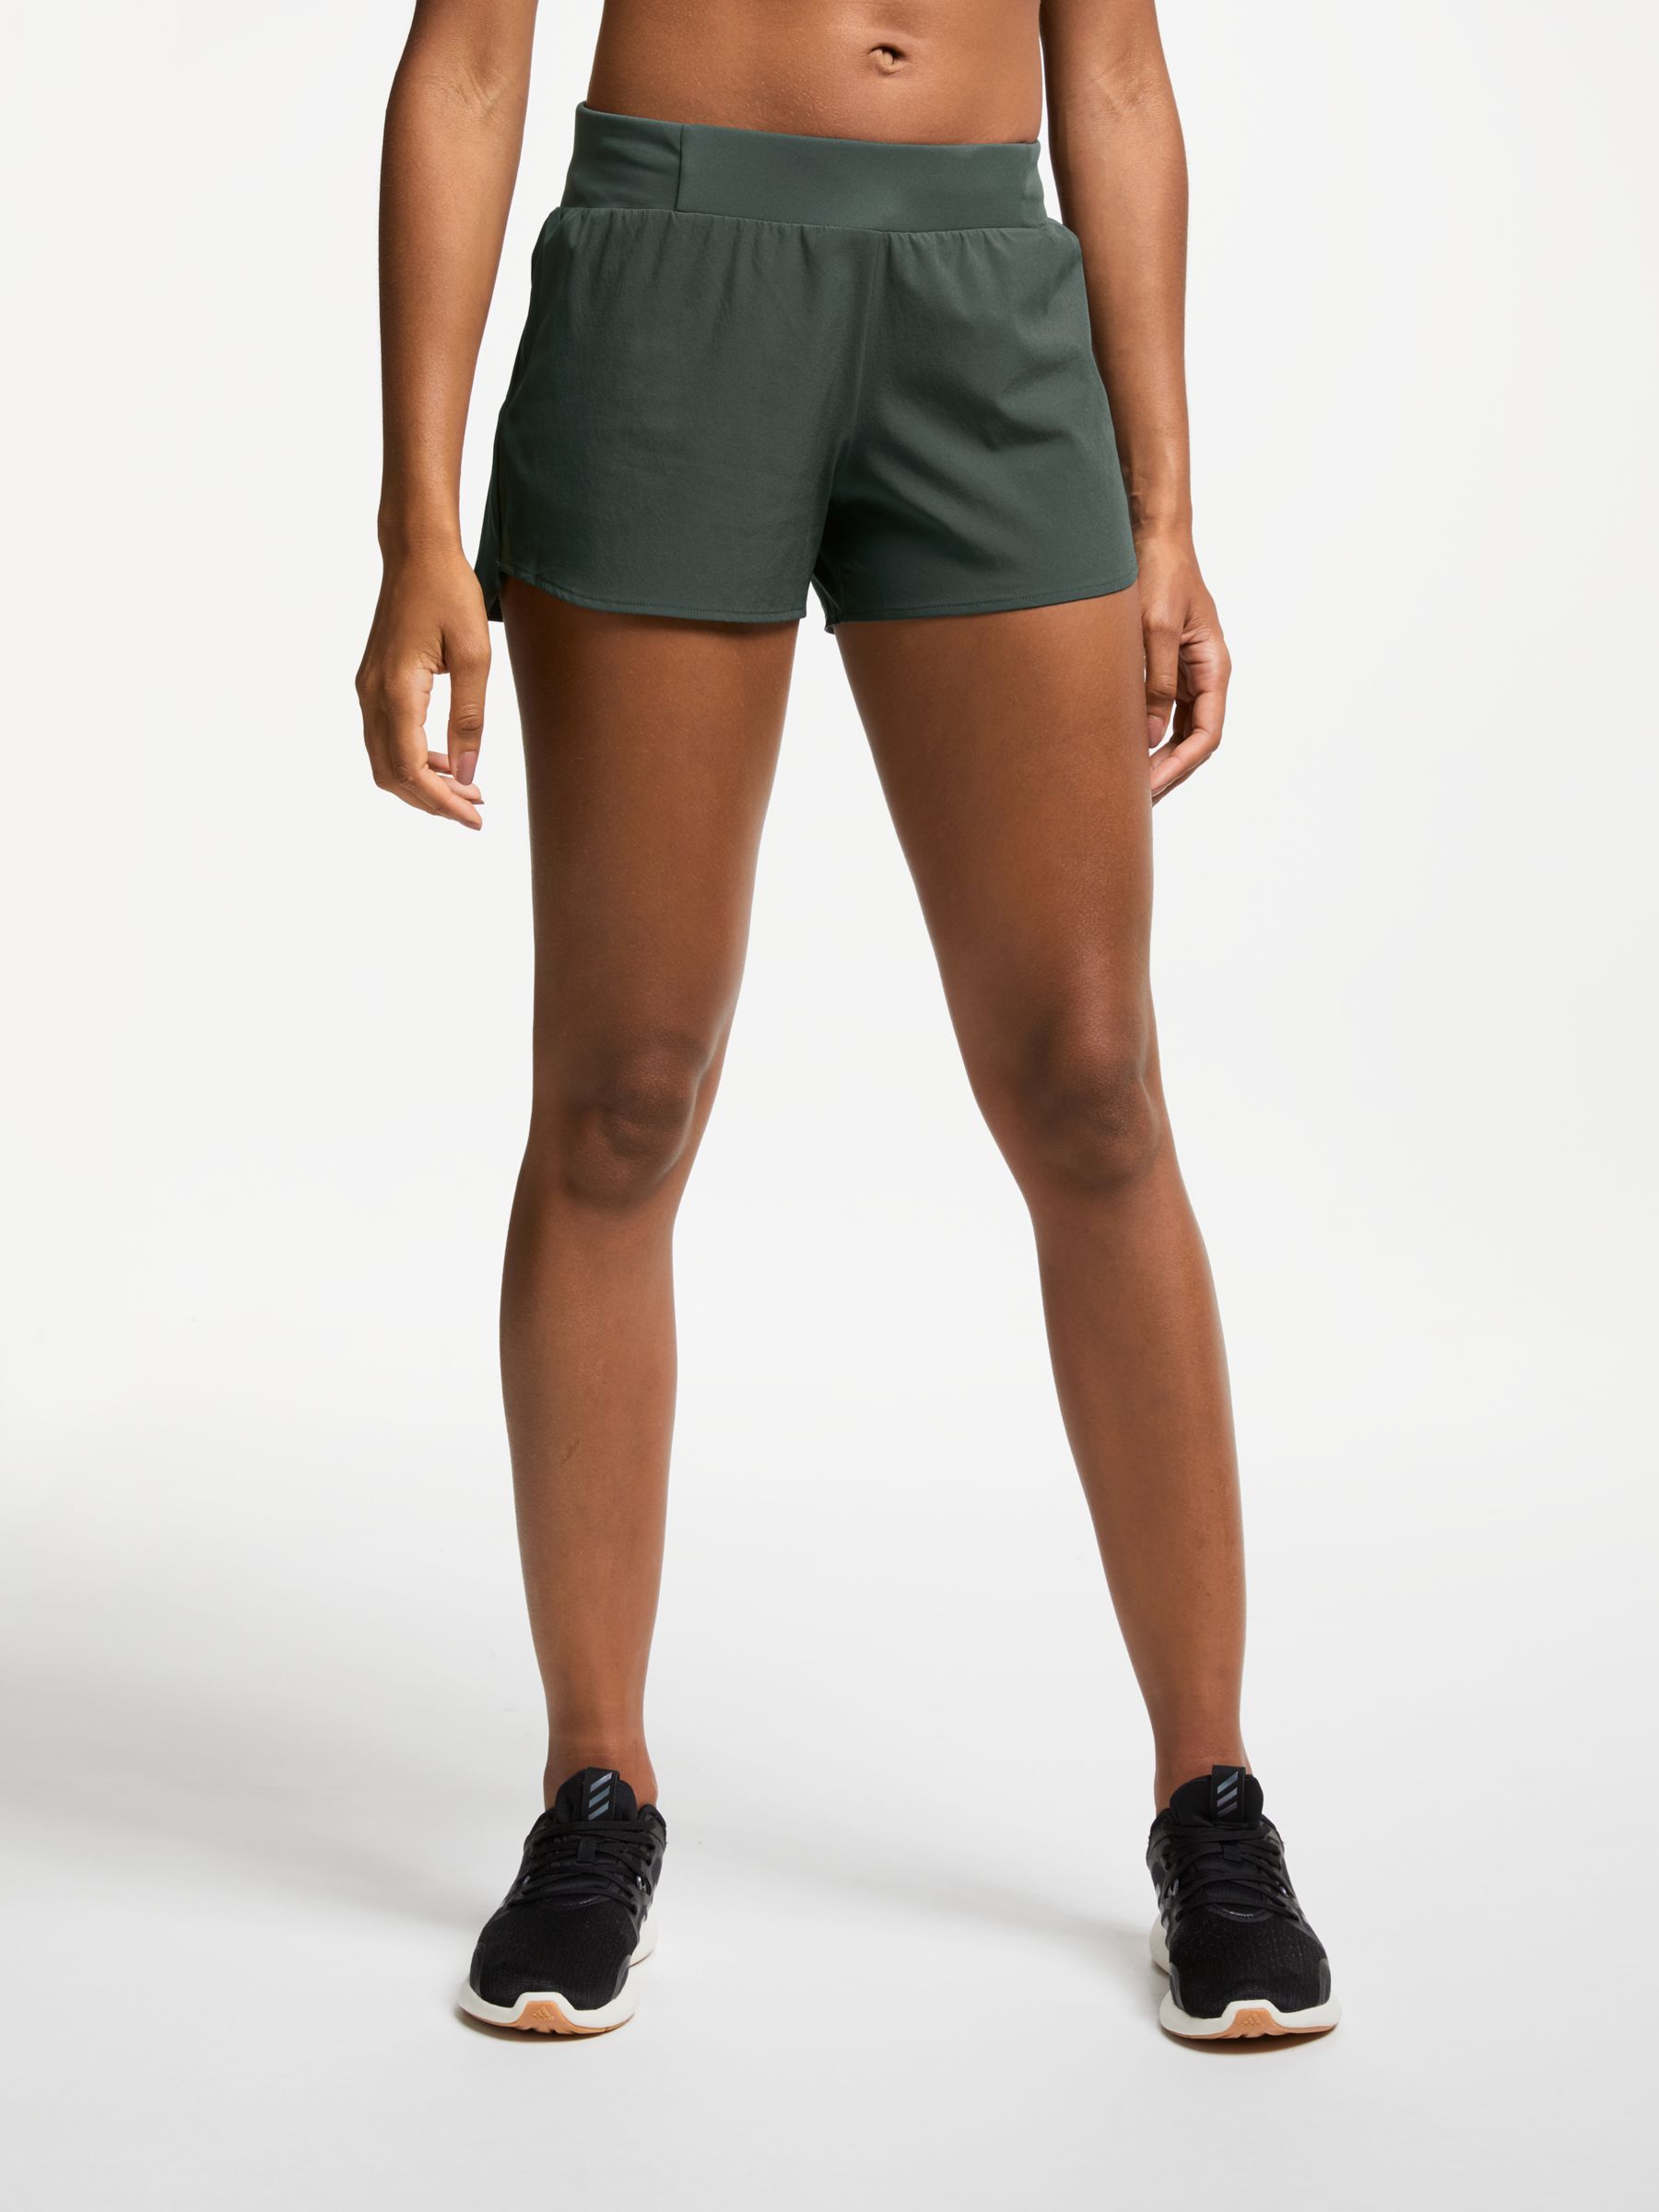 adidas women's supernova saturday shorts